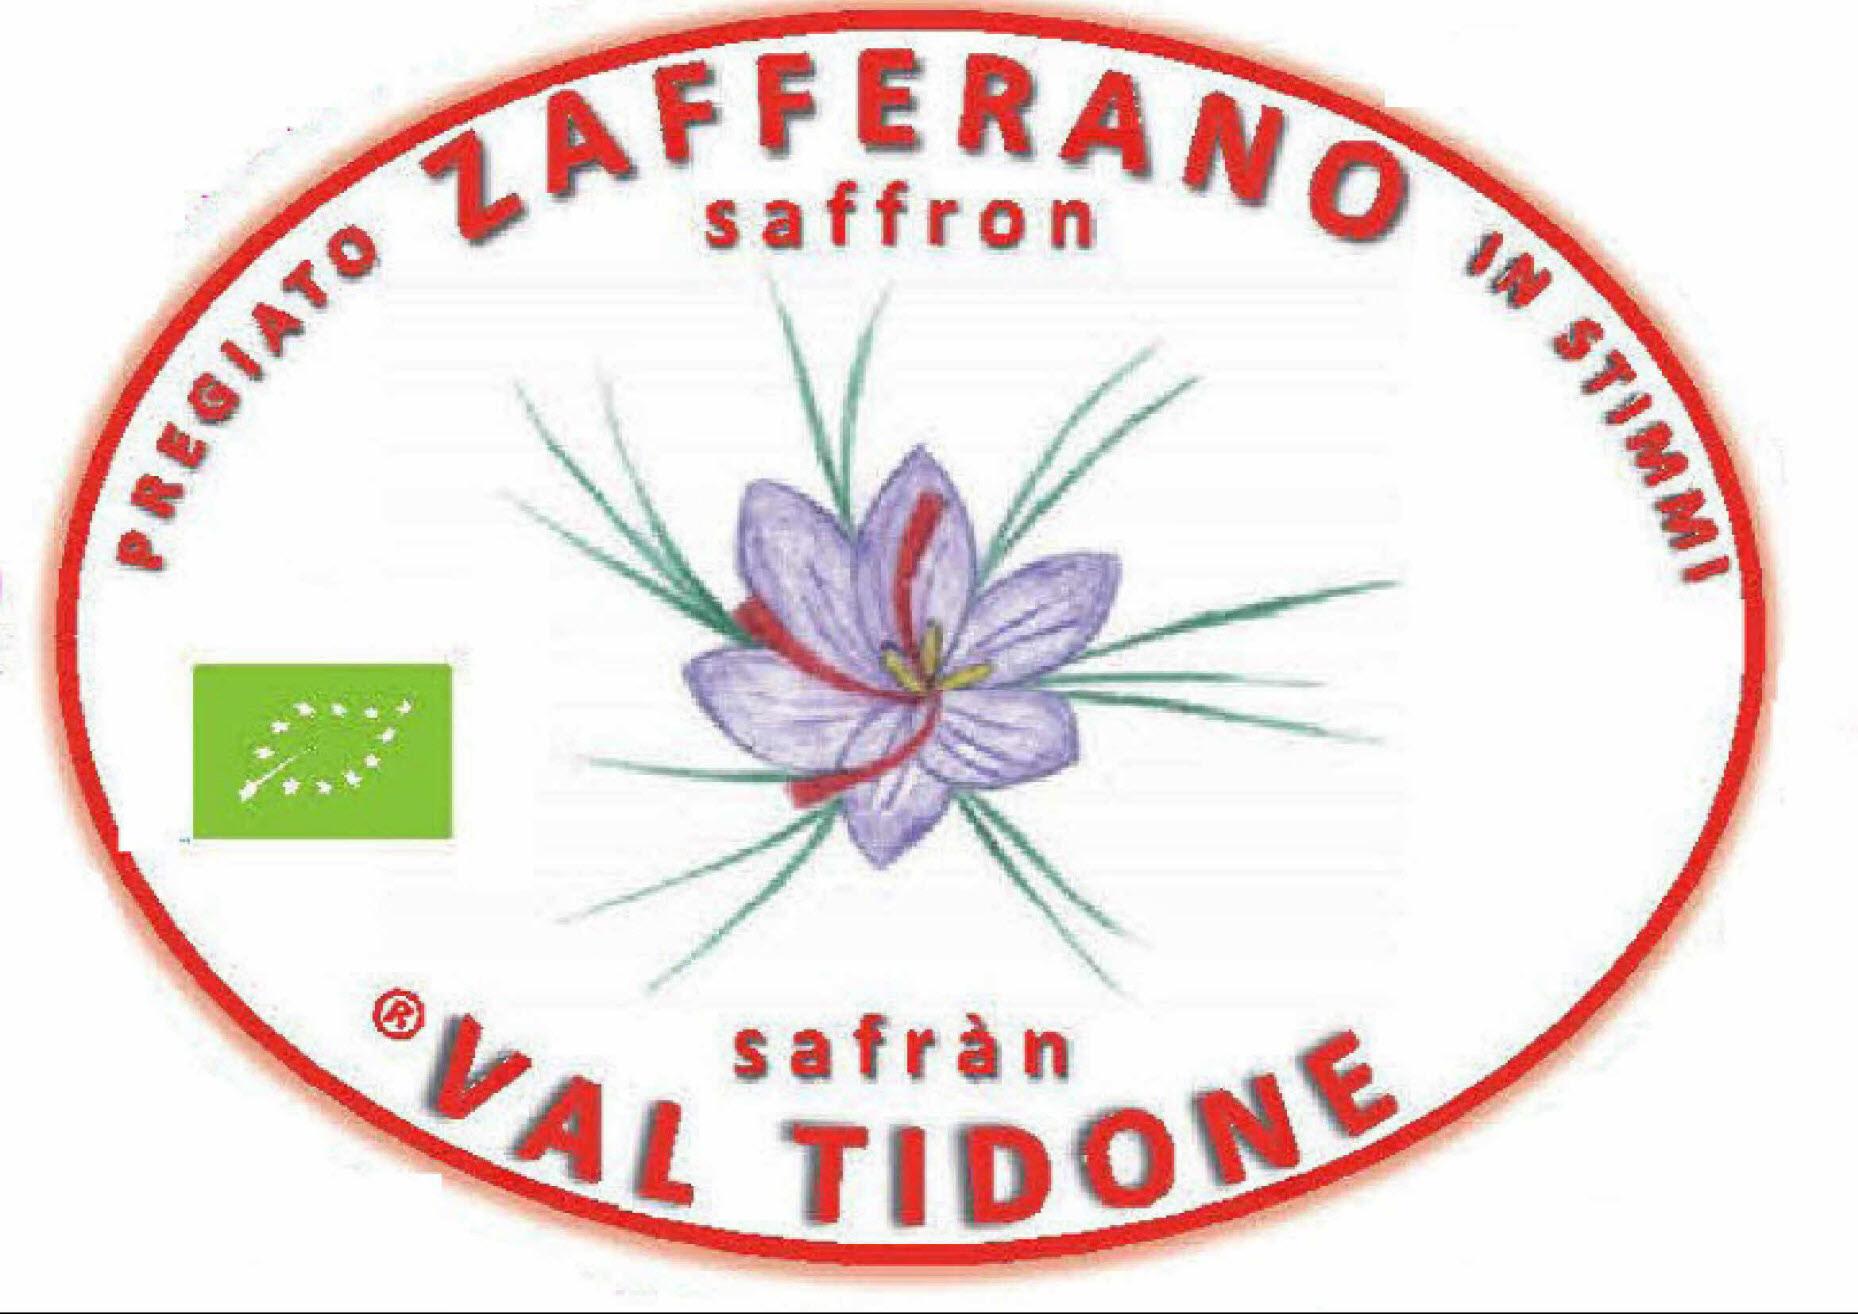 Zafferano Val Tidone 